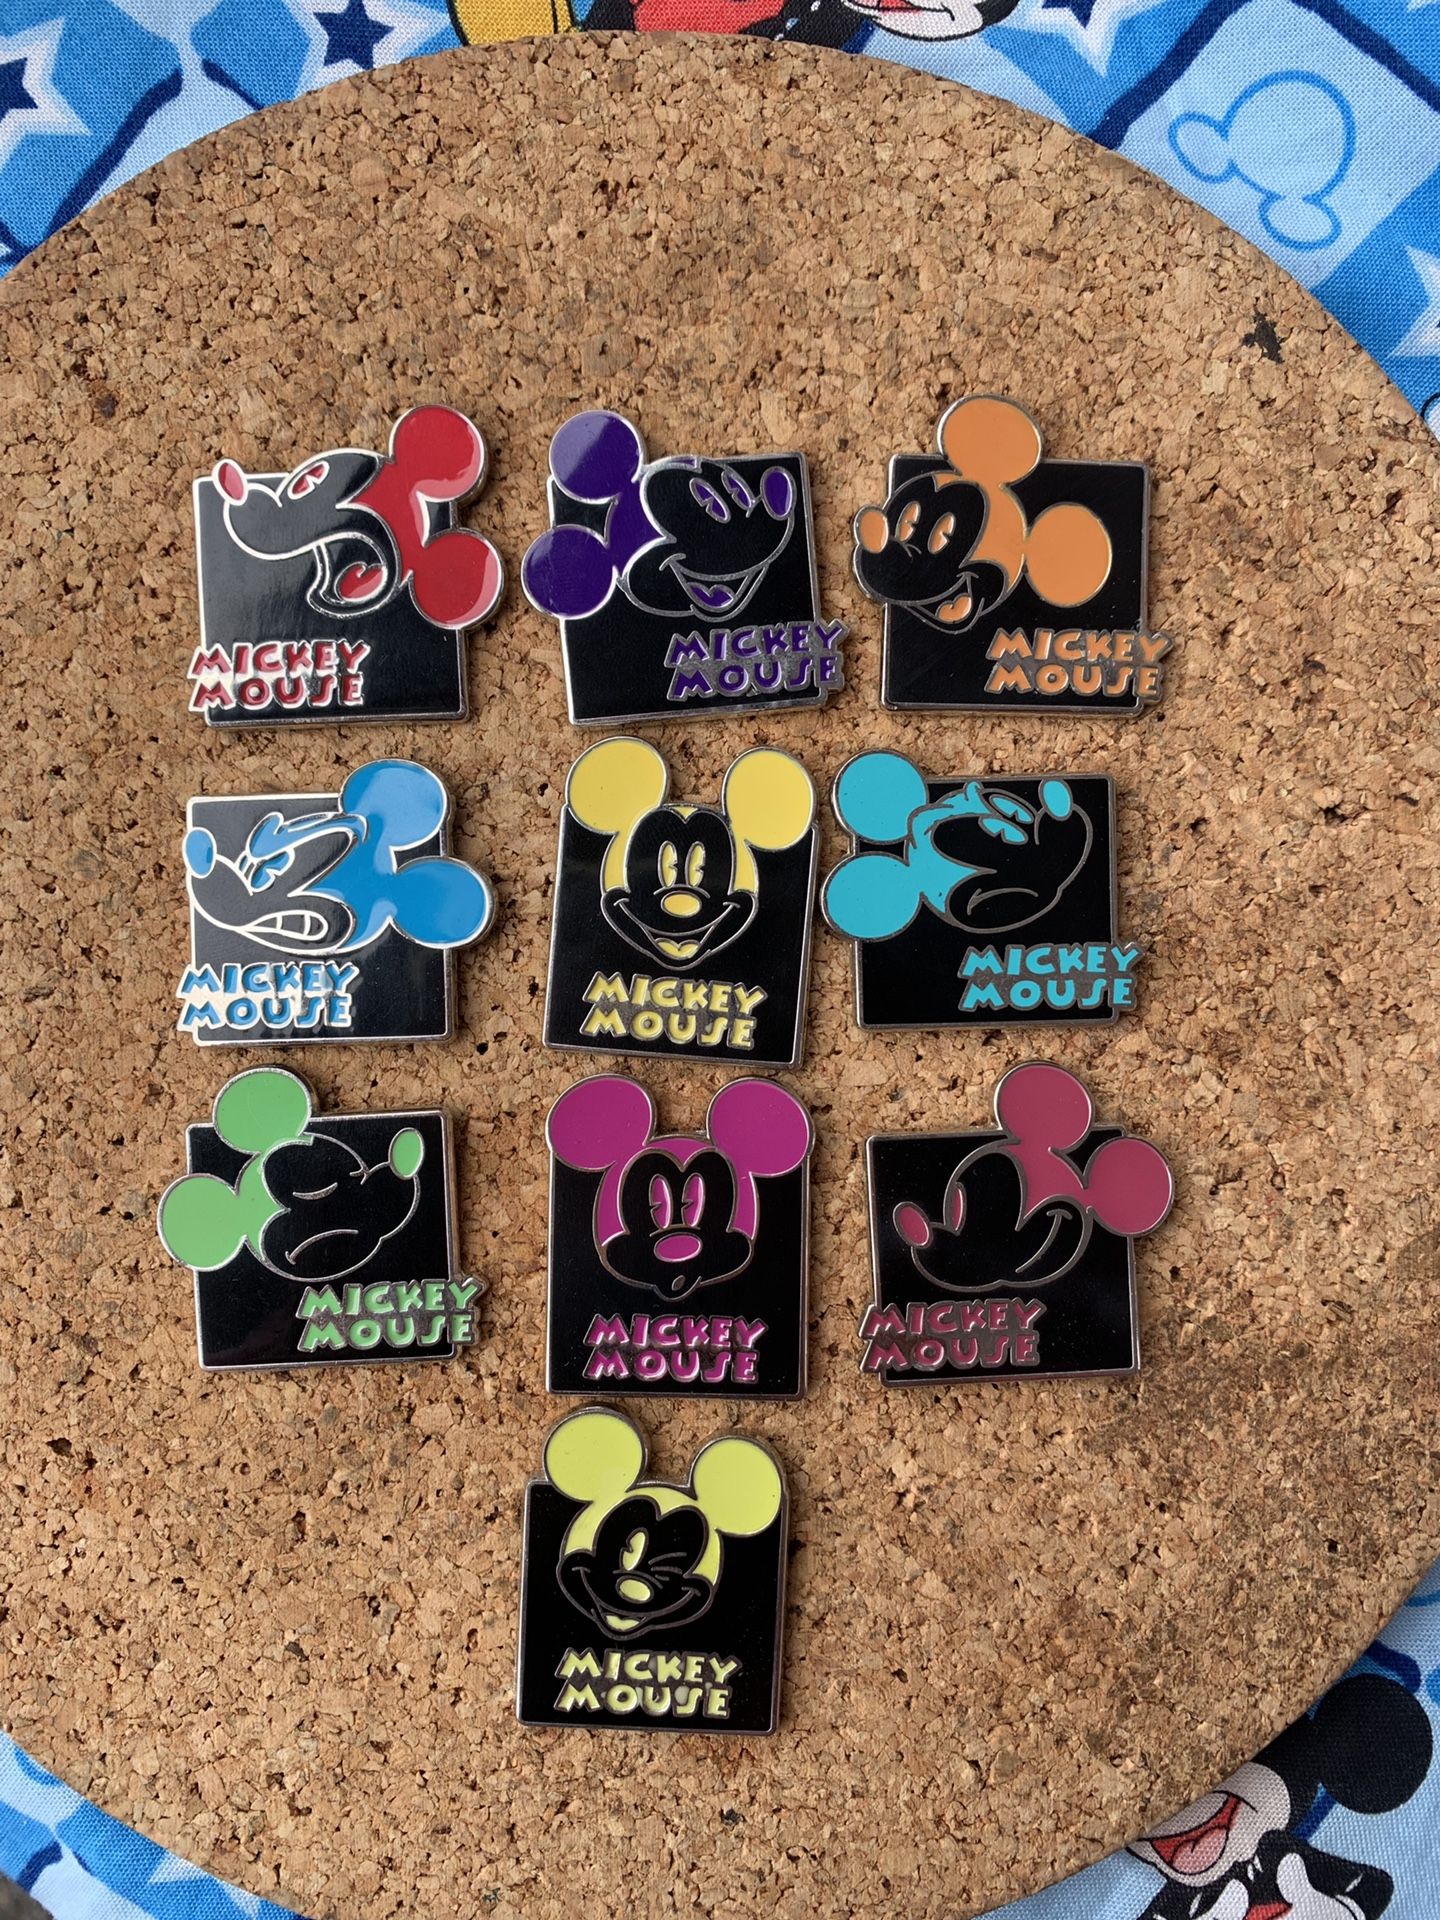 Disney pride Mickey Mouse pins